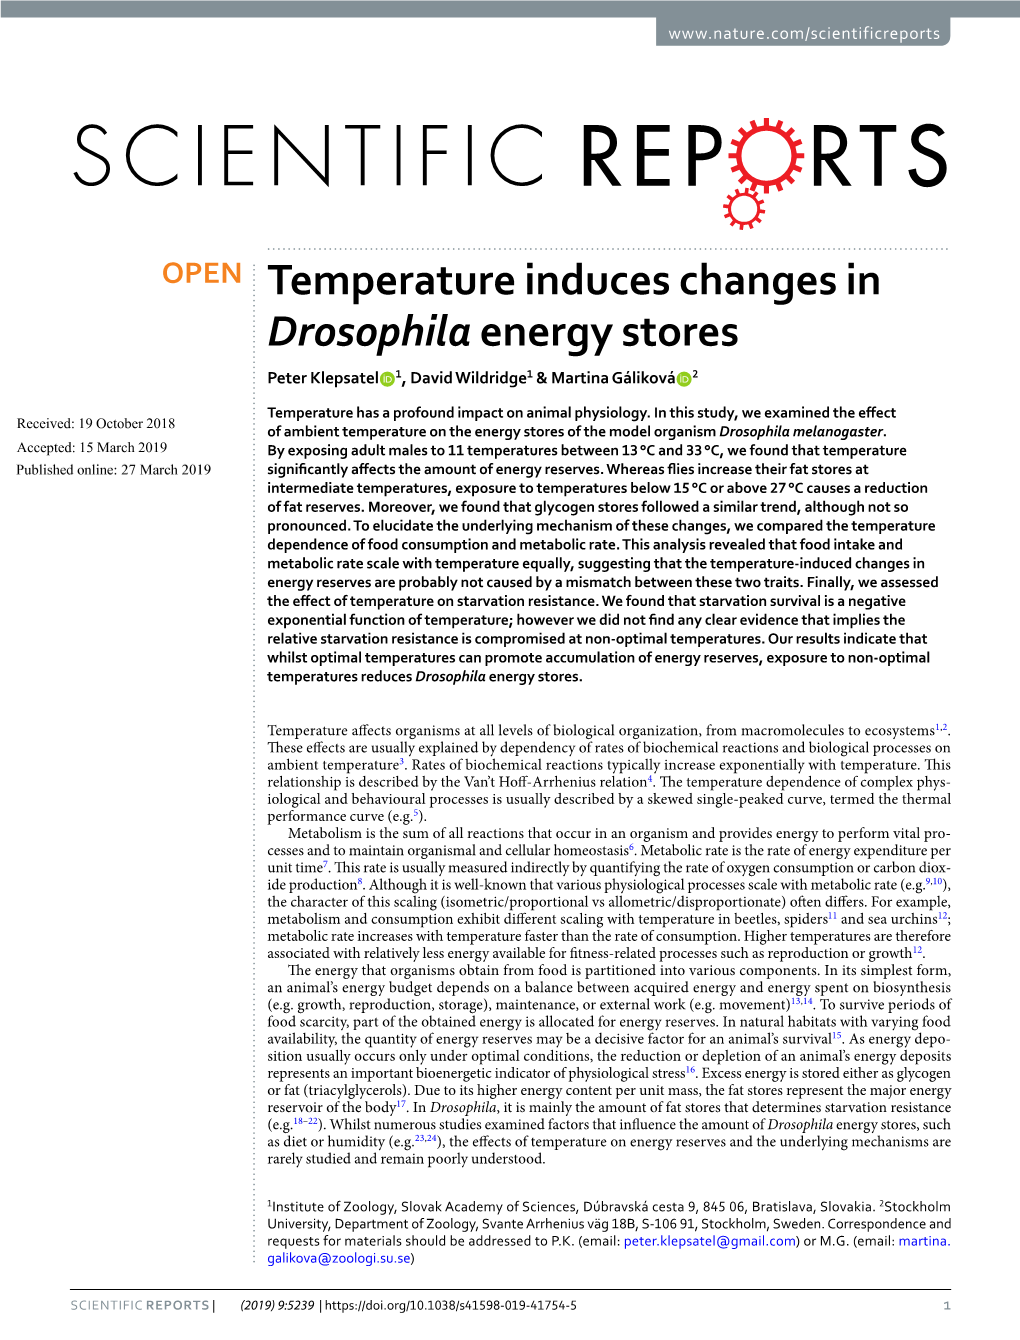 Temperature Induces Changes in Drosophila Energy Stores Peter Klepsatel 1, David Wildridge1 & Martina Gáliková 2